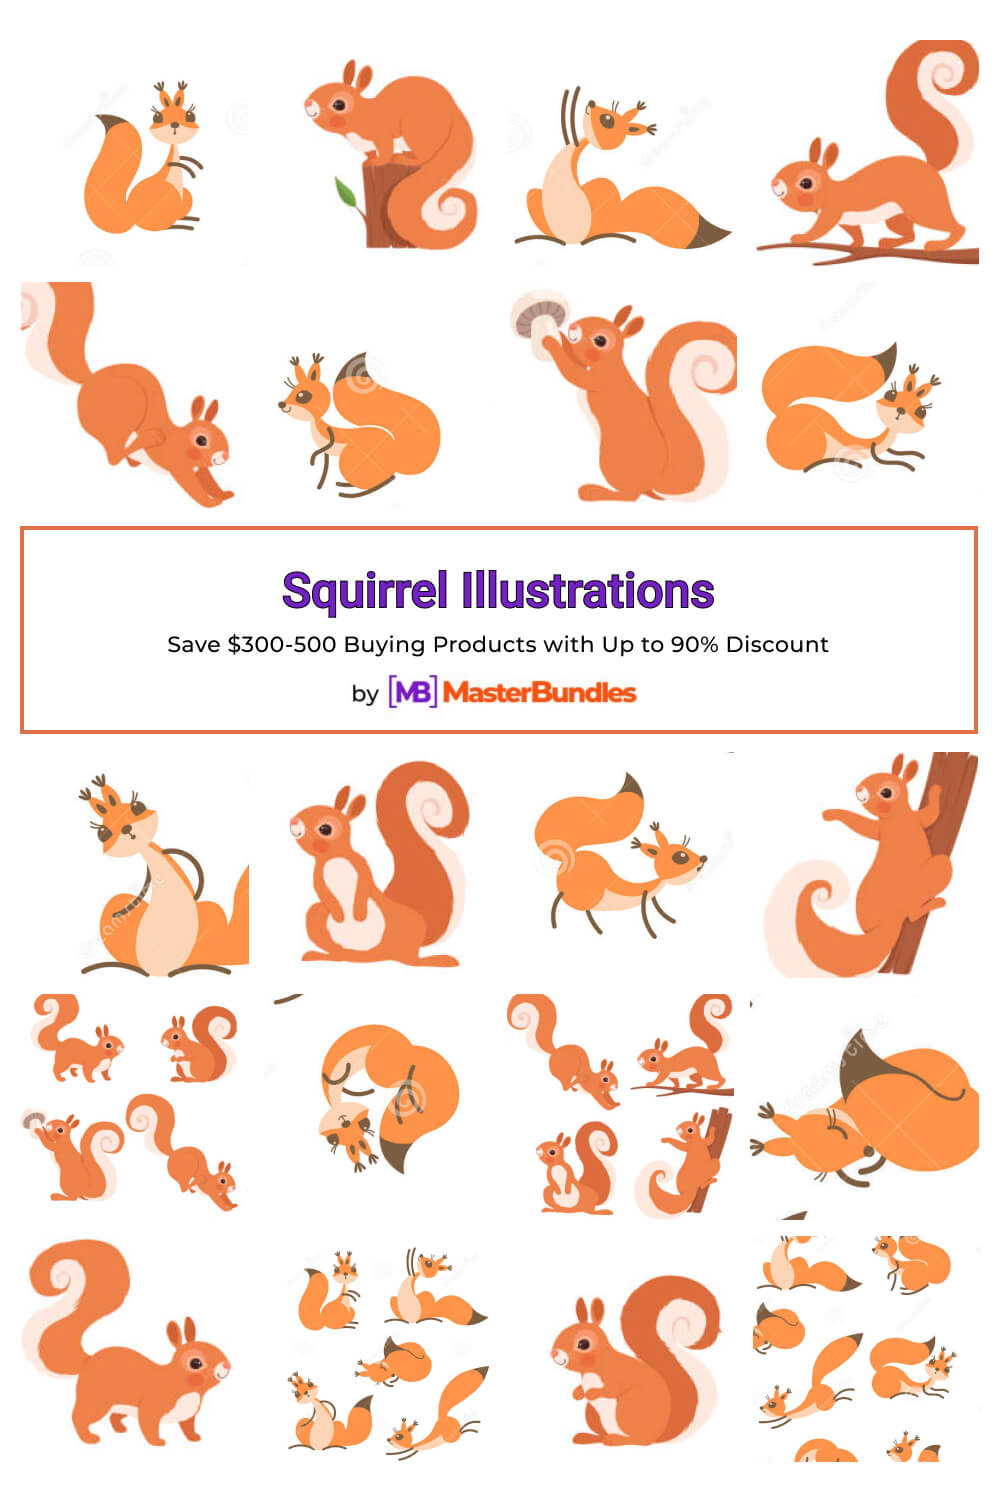 squirrel illustrations pinterest image.